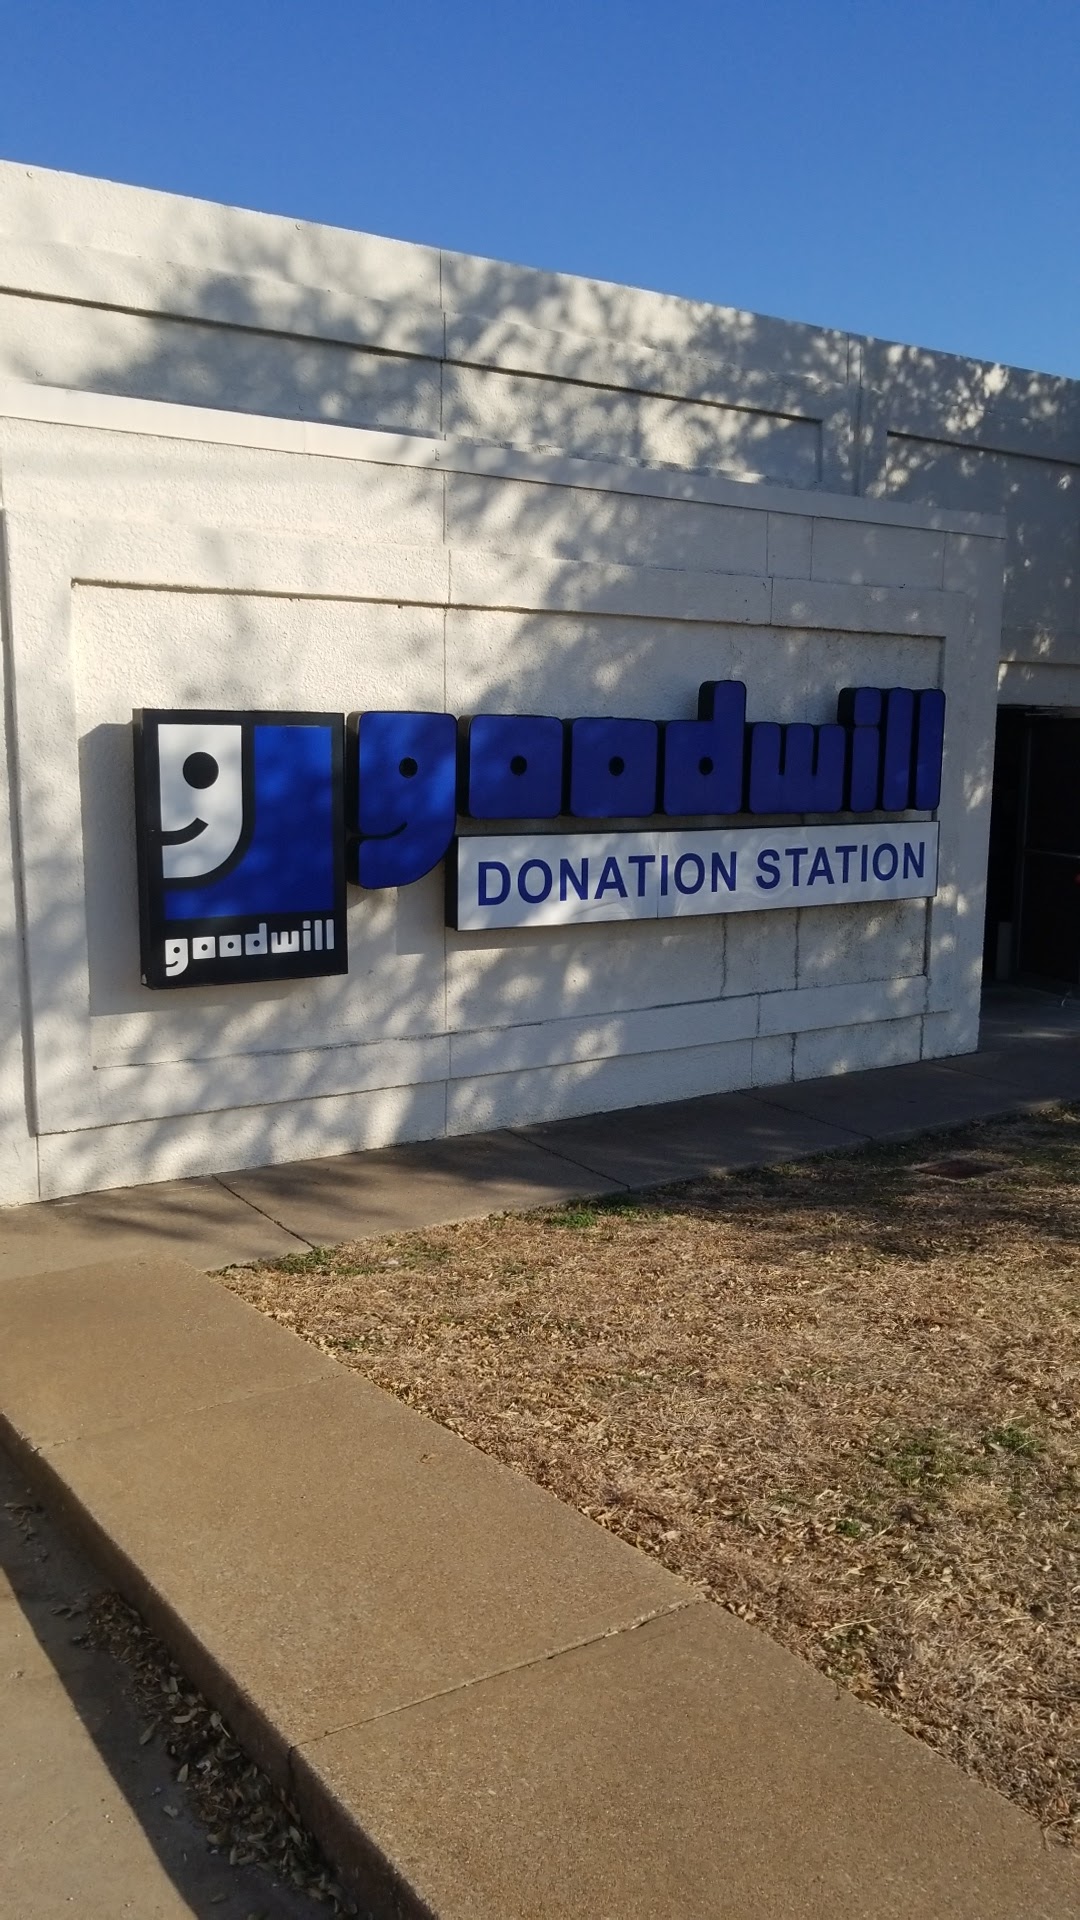 Goodwill Donation Station - University